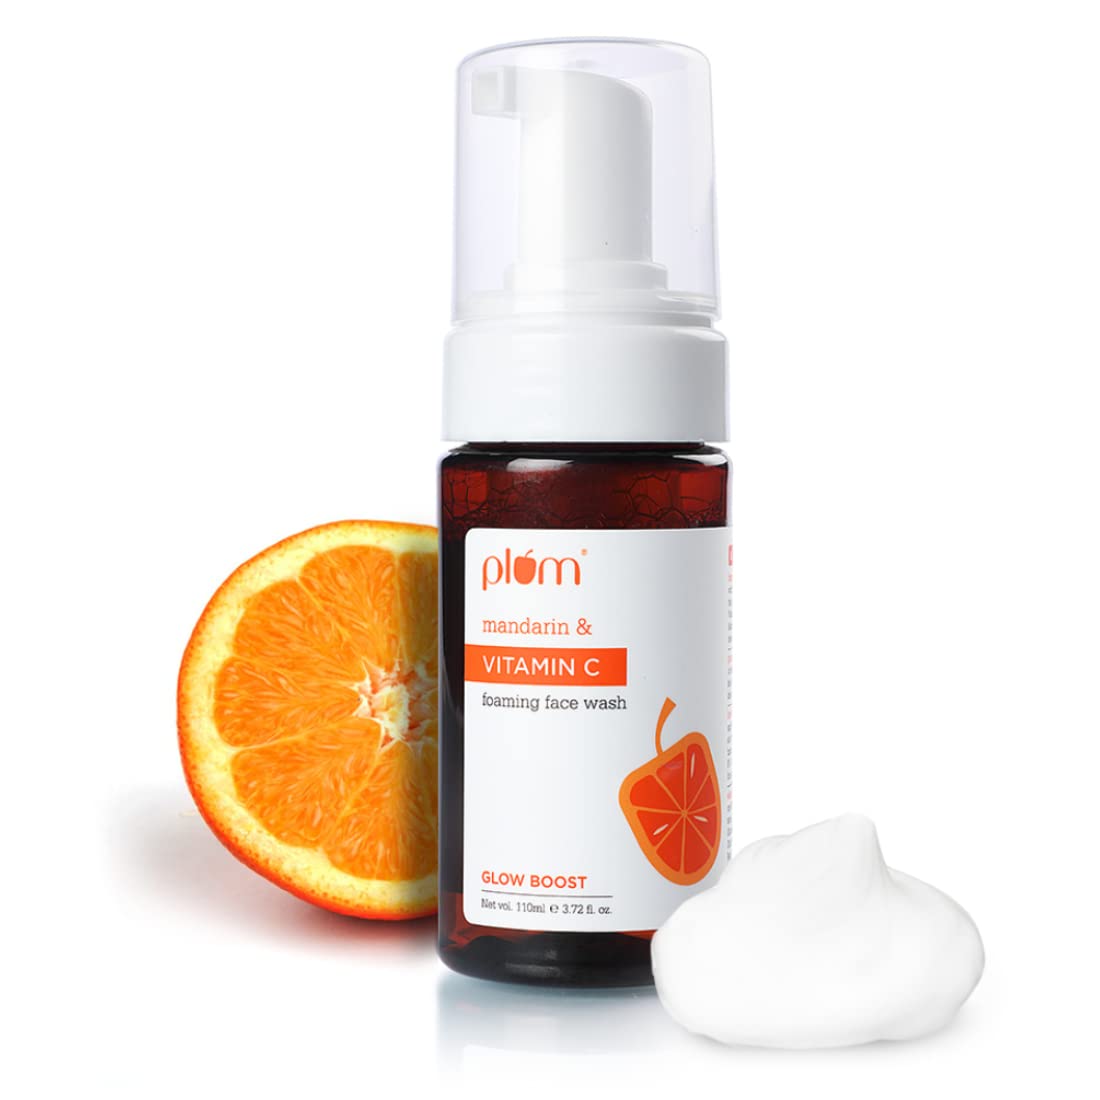 Buy Plum Vitamin C & Mandarin Foaming Face Wash, 110 ml Online